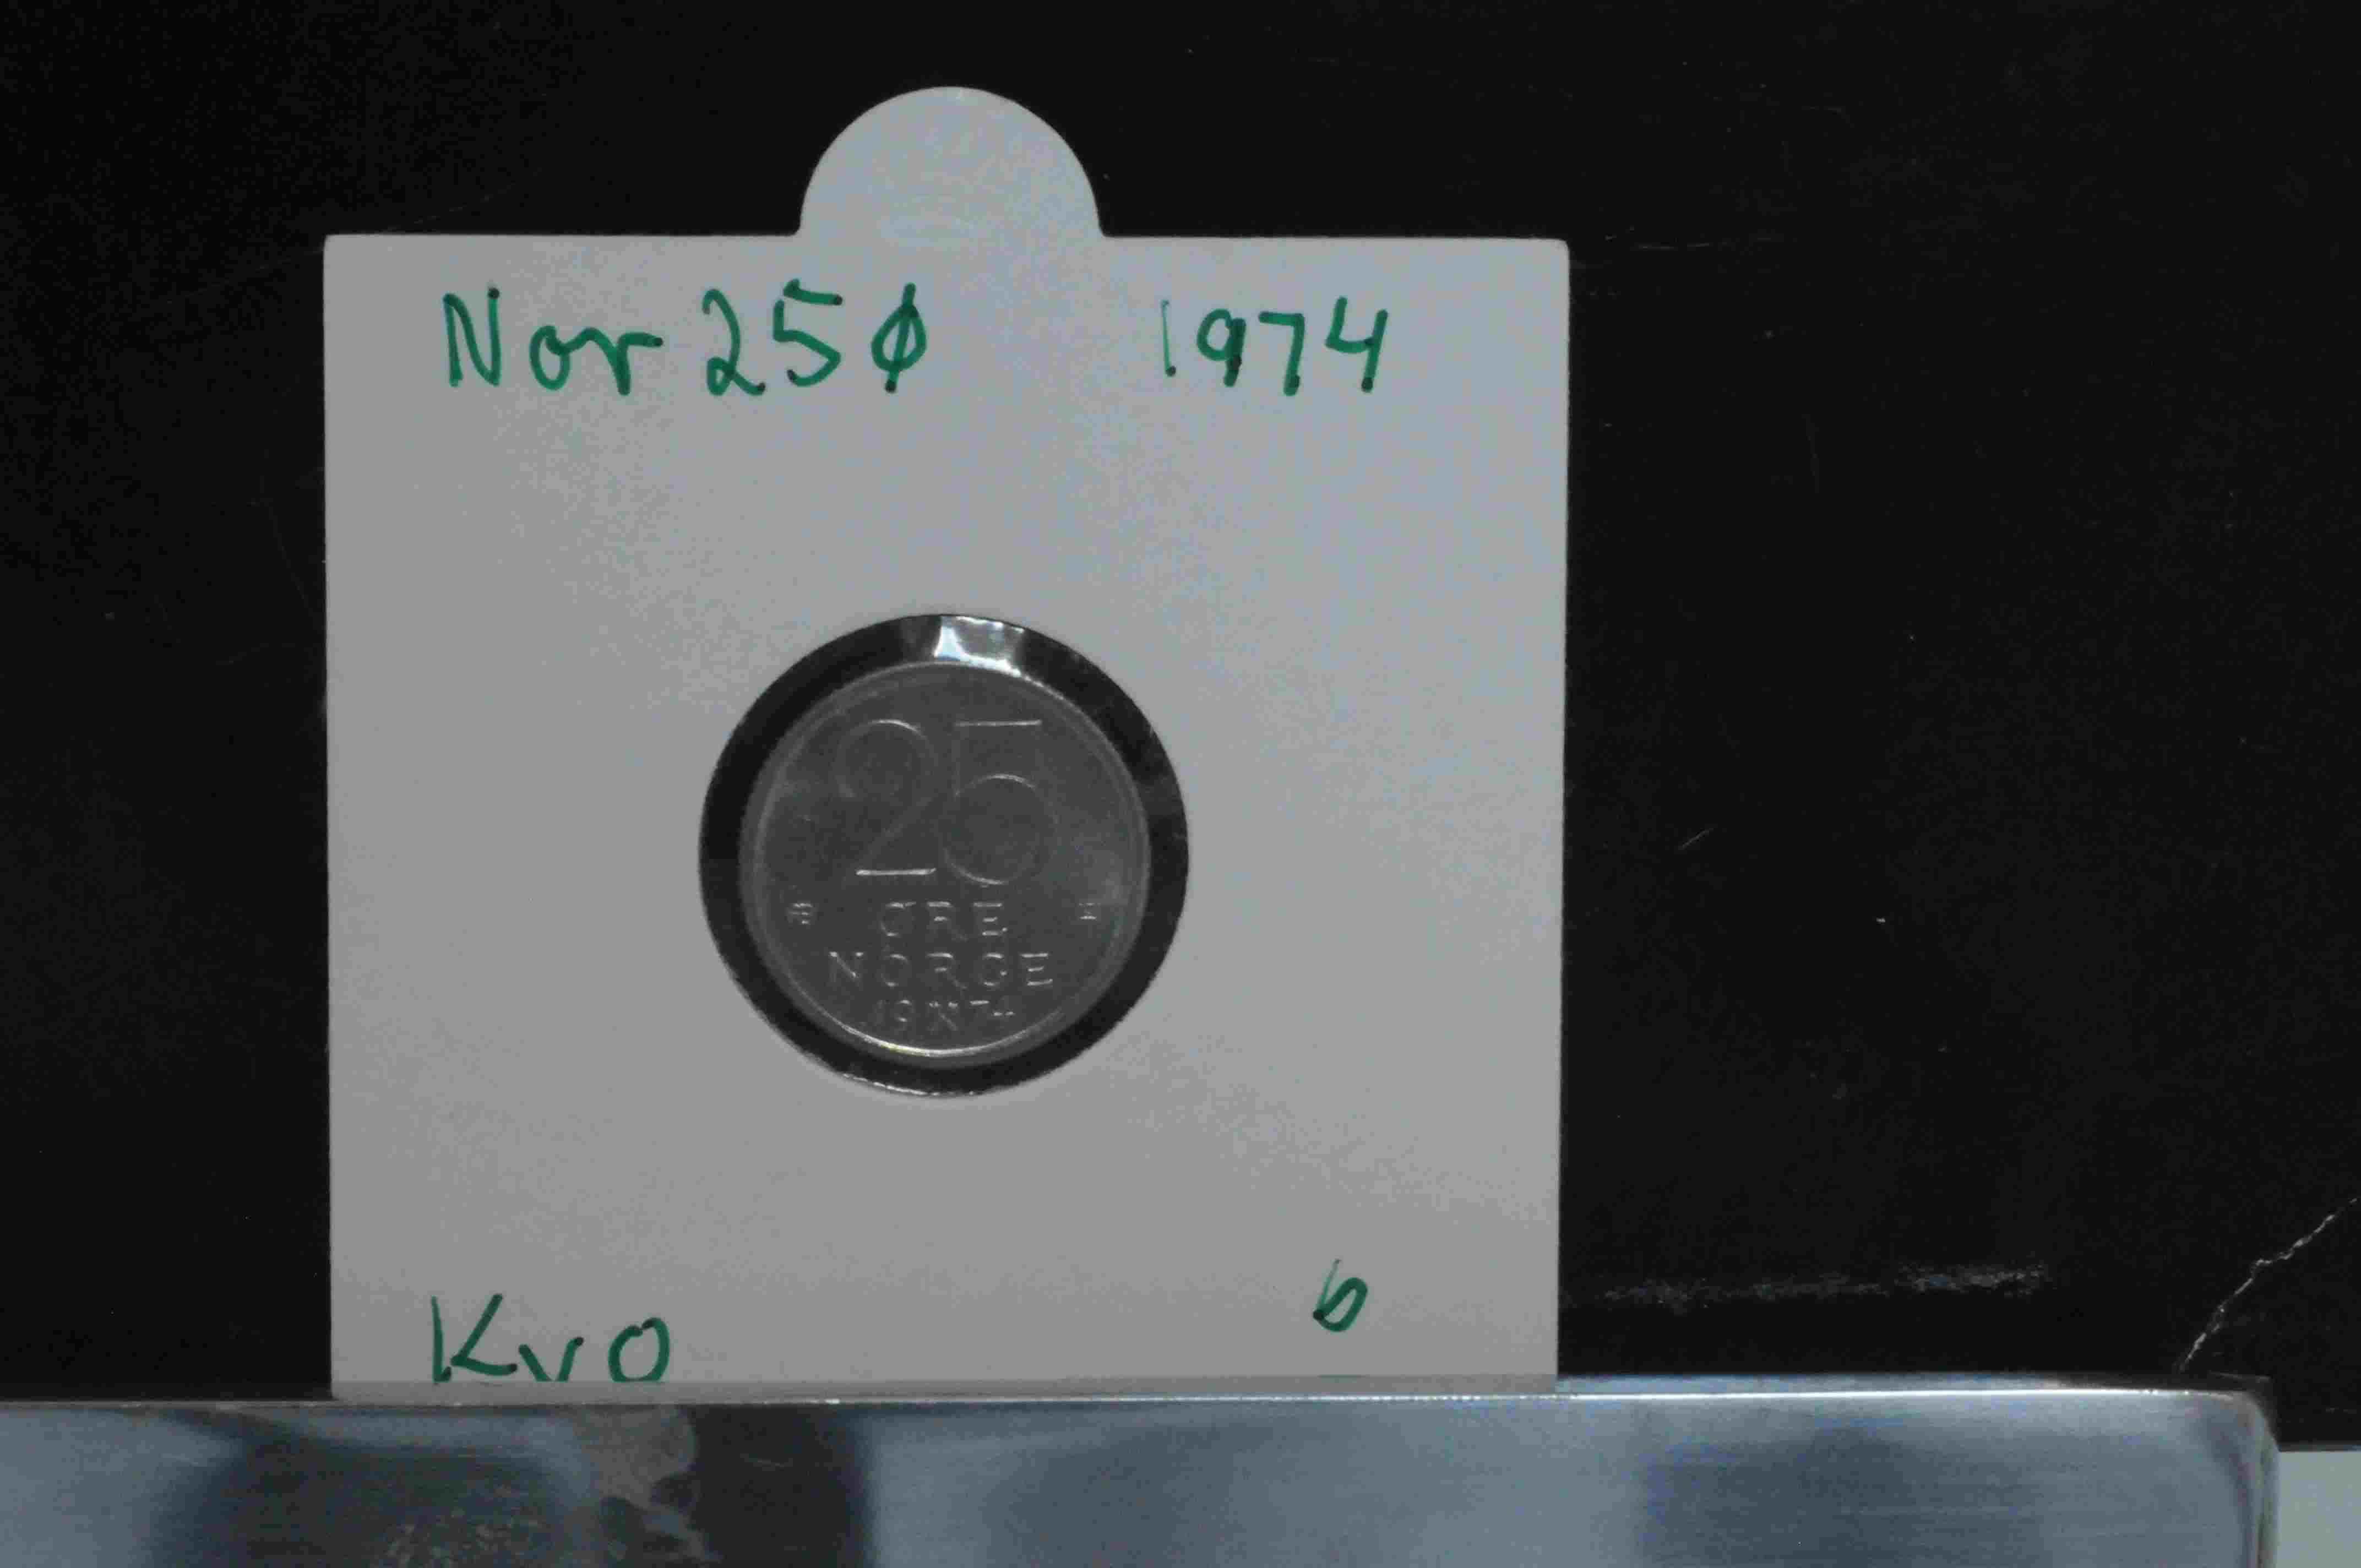 Nor 25ø 1974 kv0